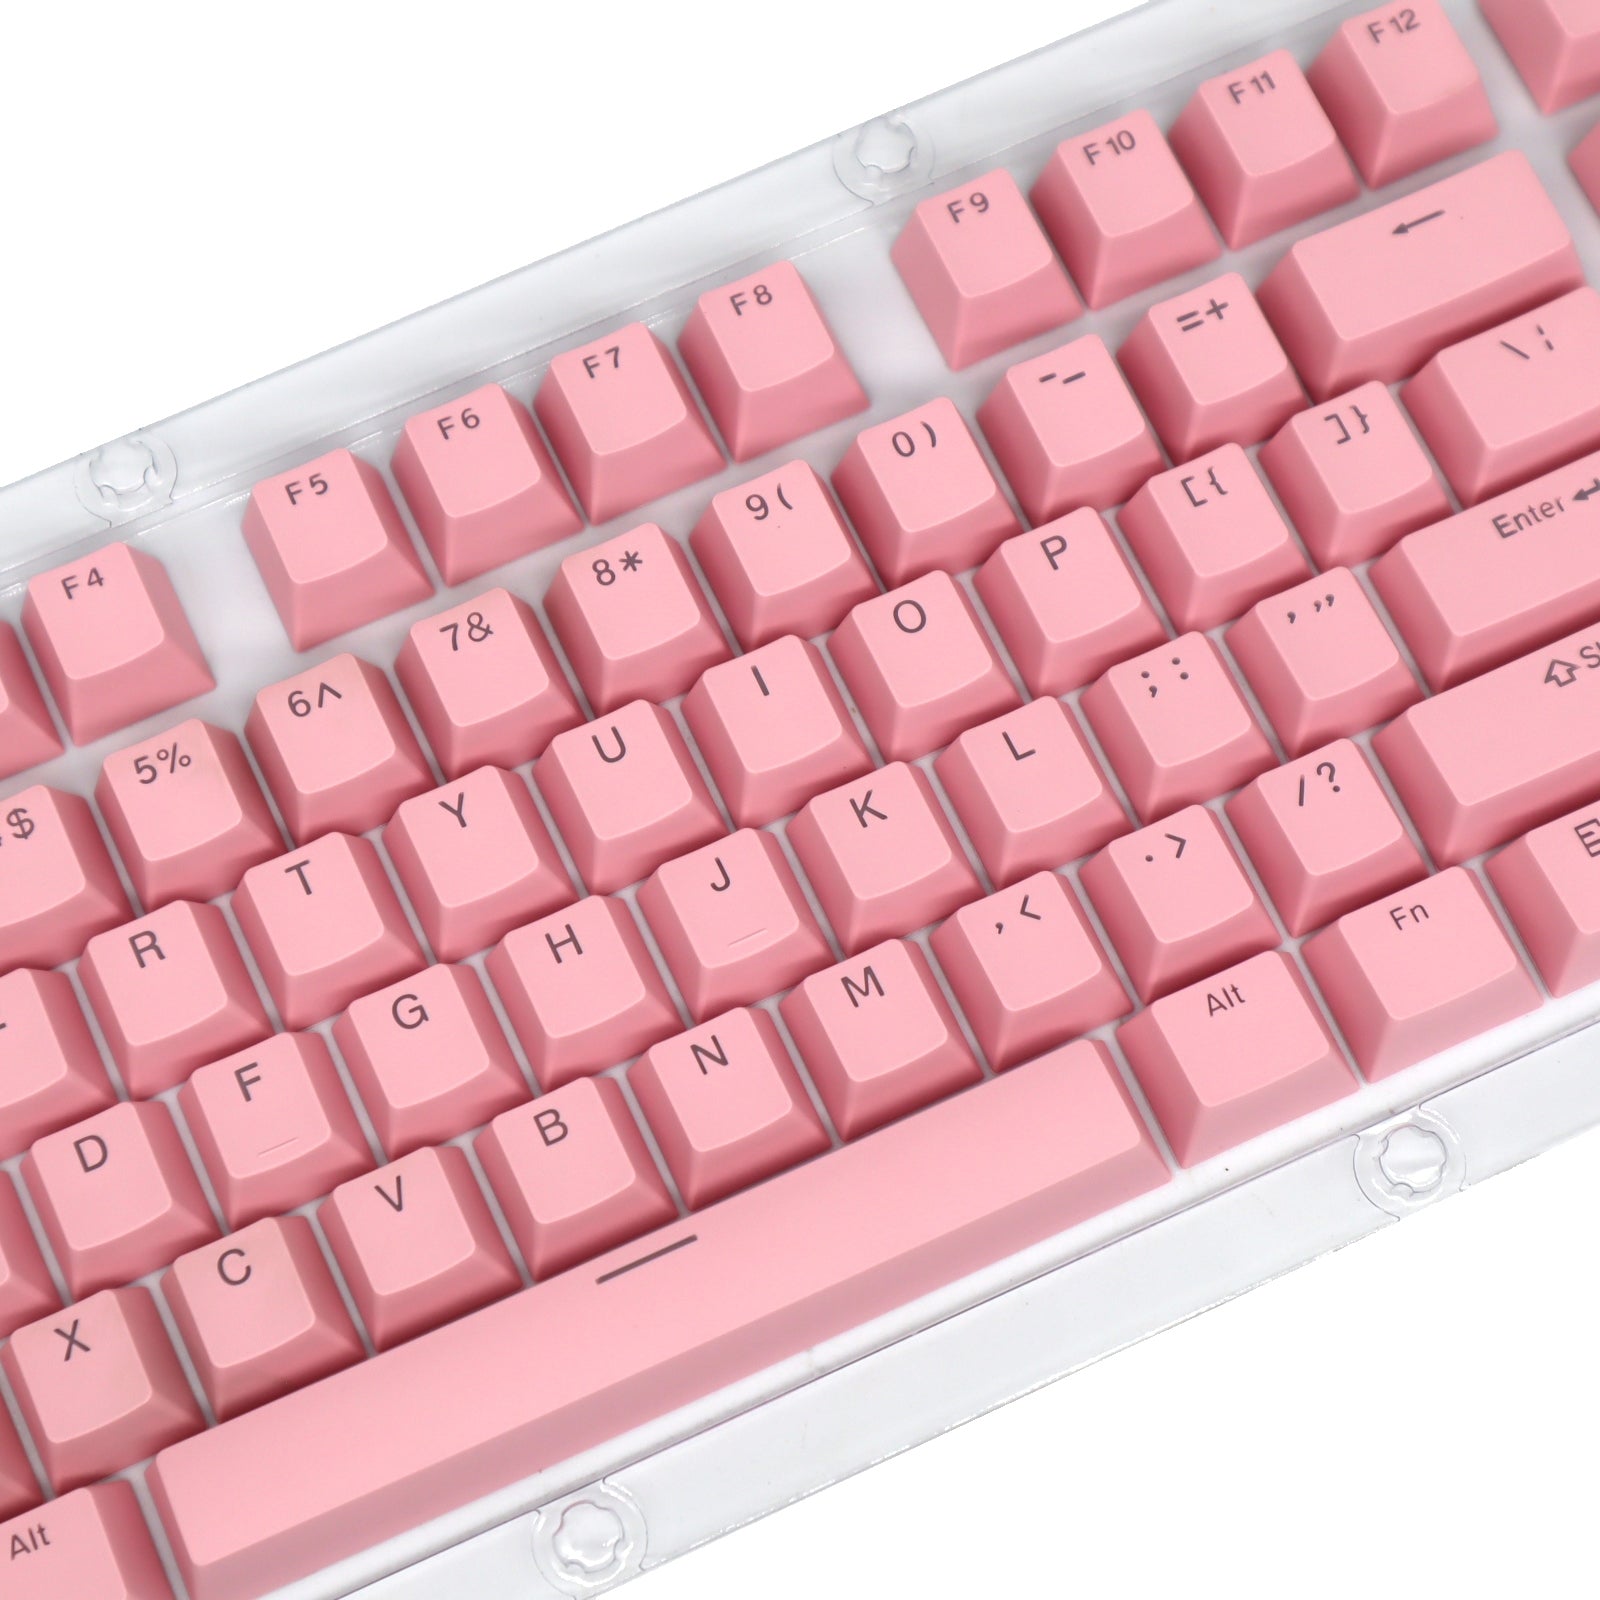 Pink PBT Keycaps